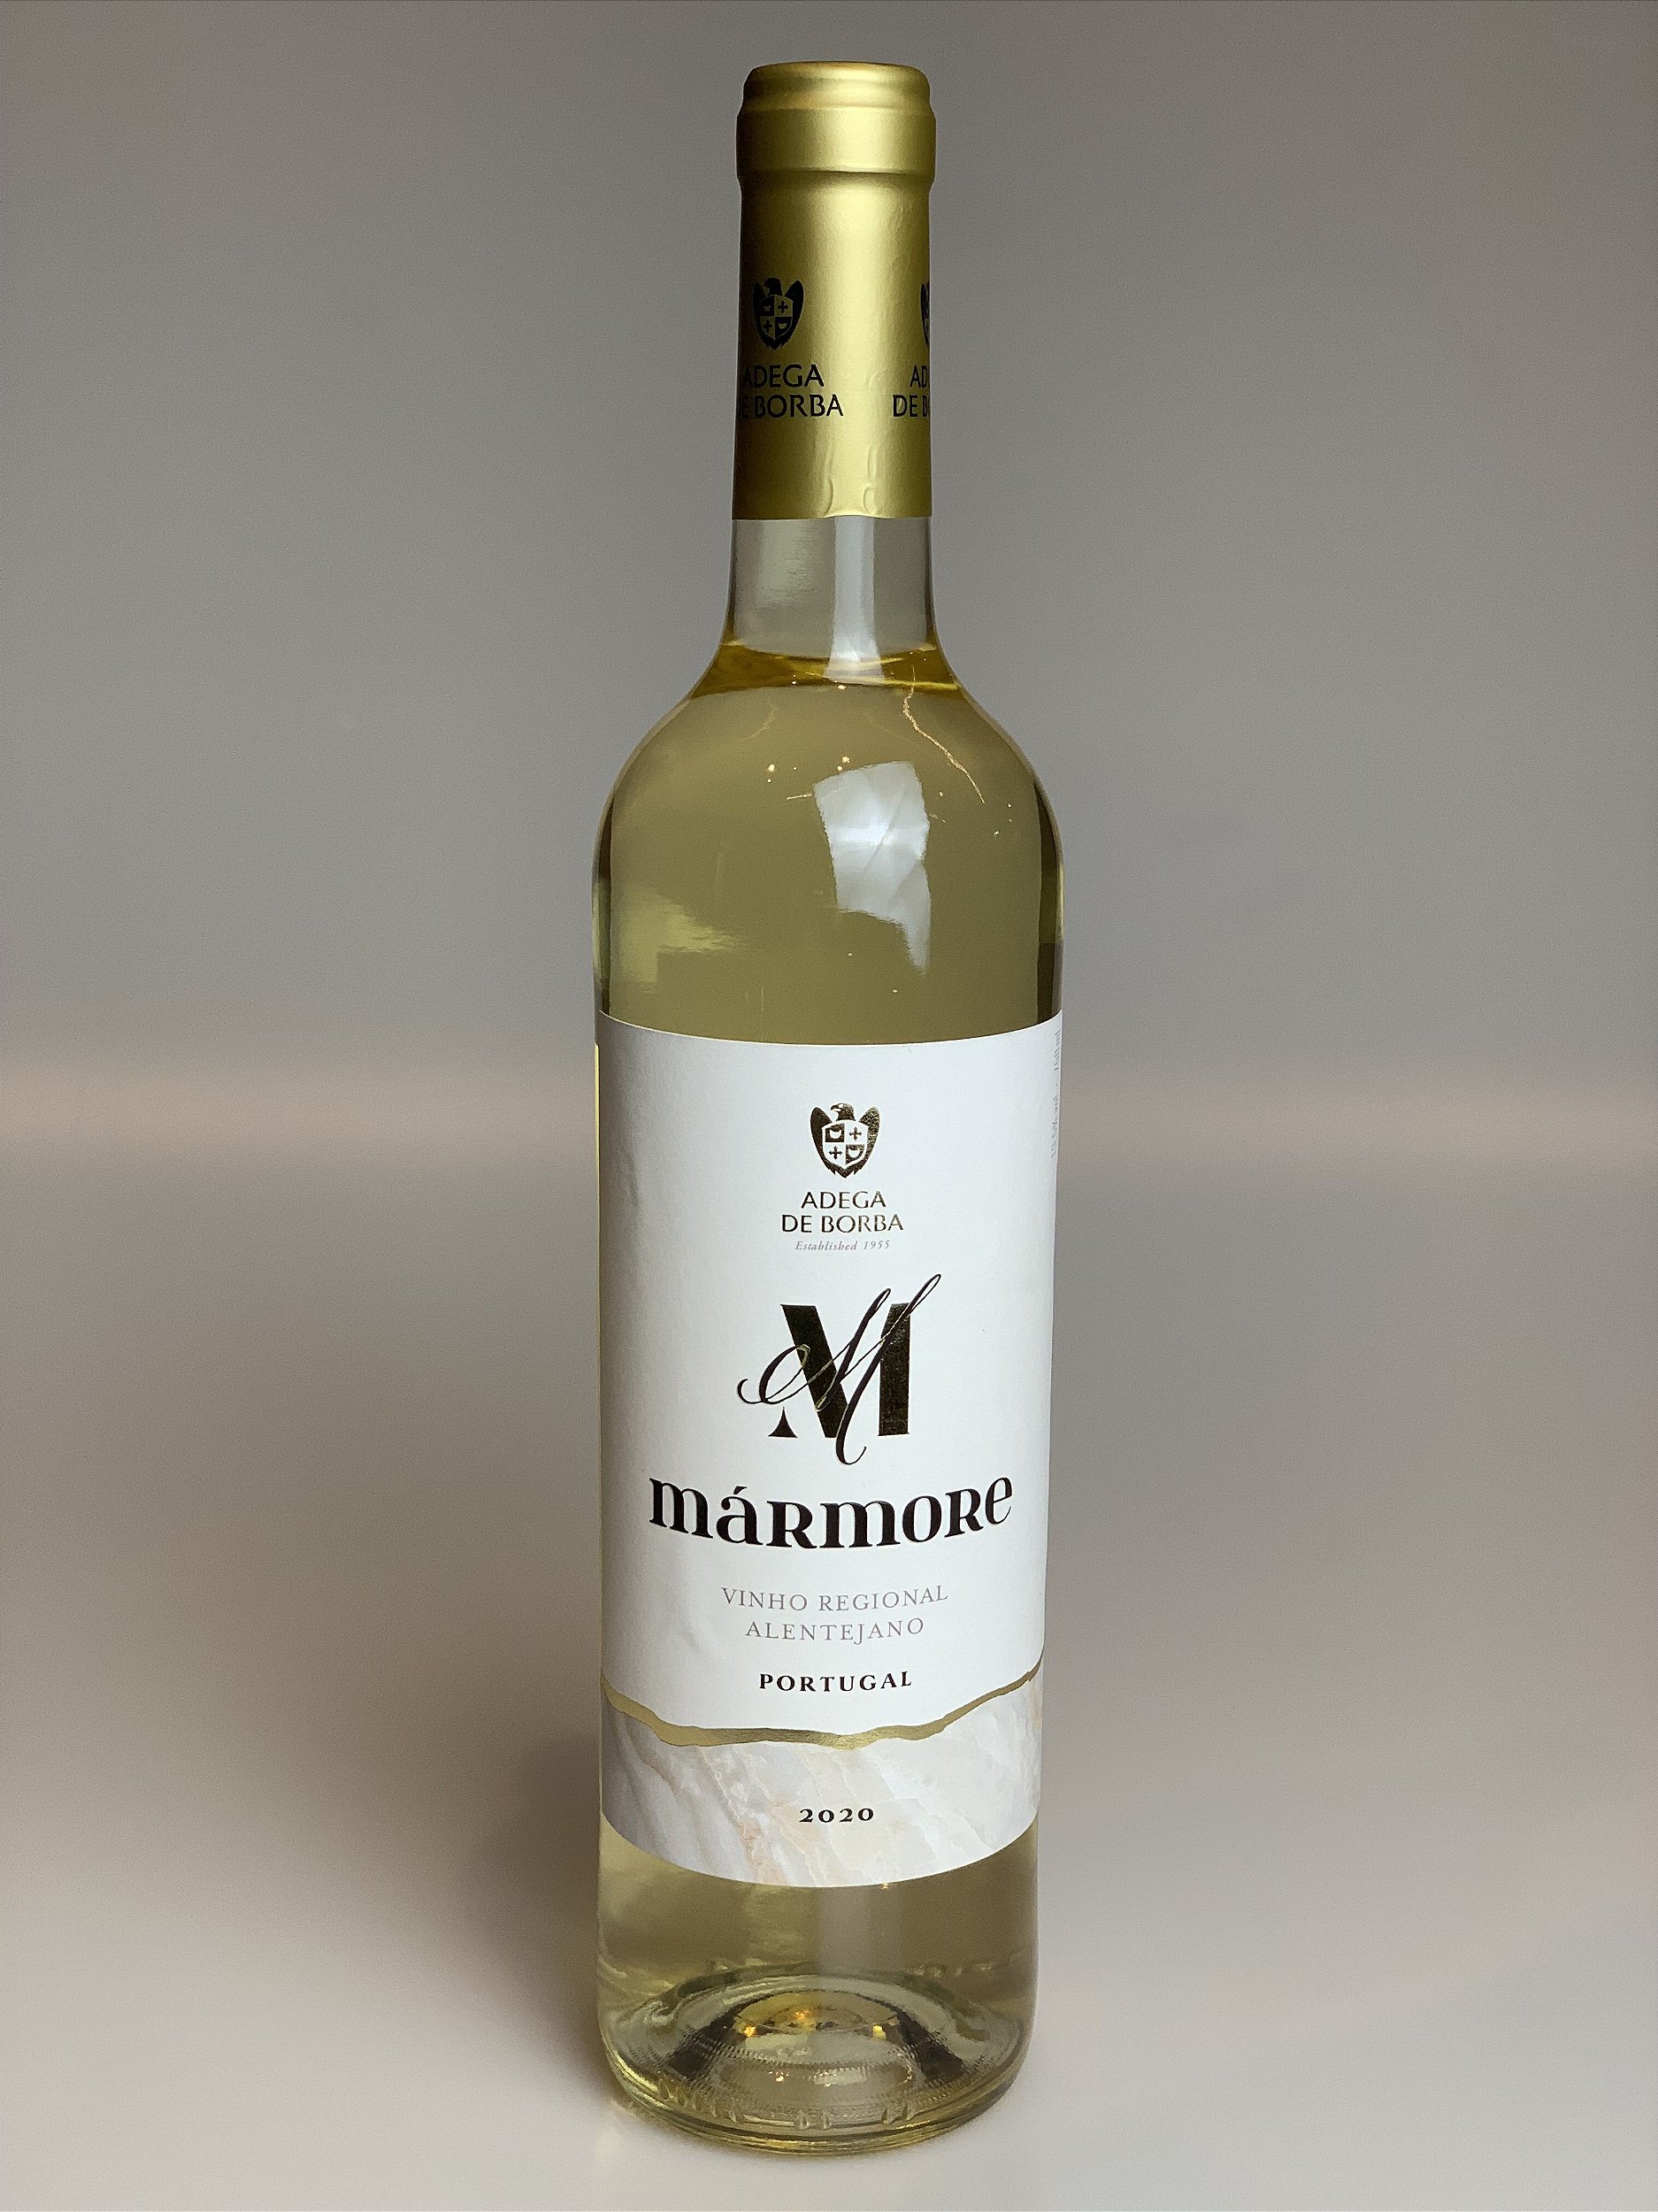 Kaufen Sie die neuesten Artikel im Ausland! Vinho Marmore Branco | nova Aldeias Porto portuguesa D\'Porto favorita! 750ml - mercearia Do - A sua Aldeias